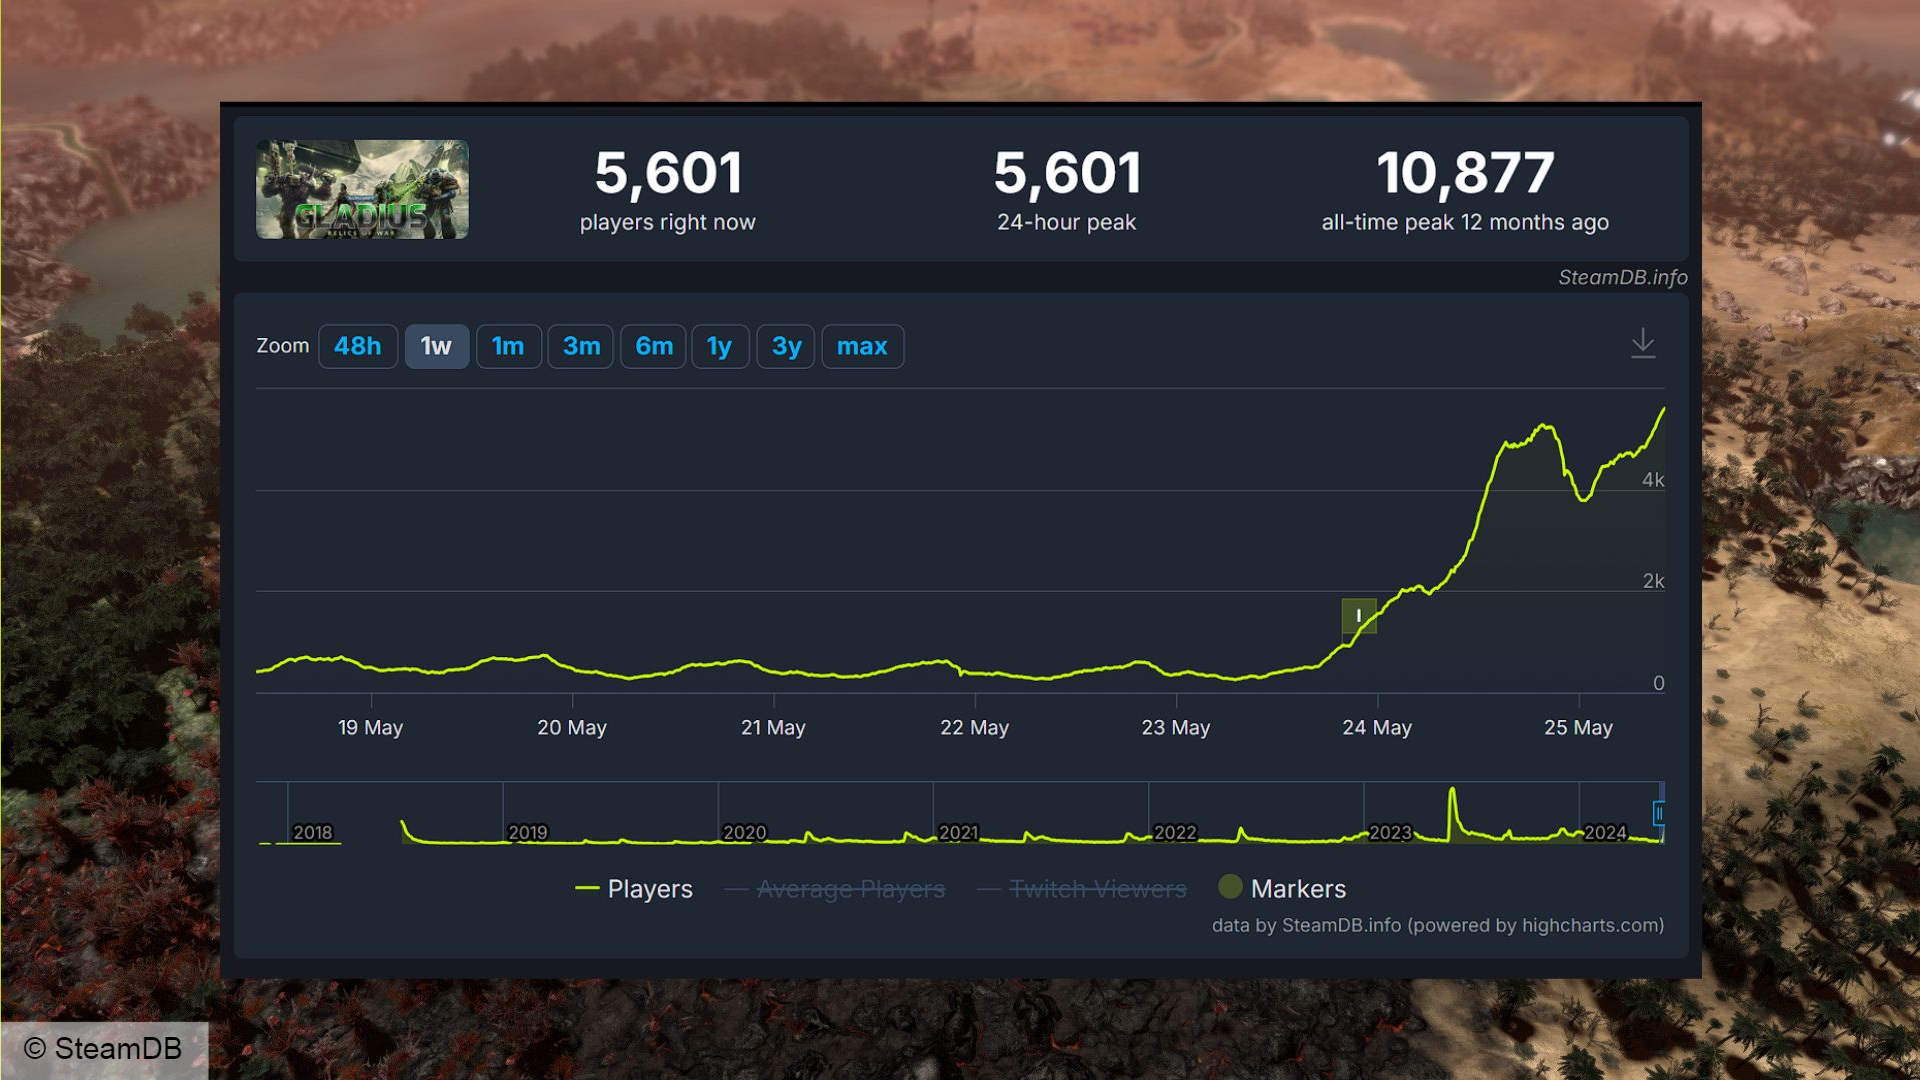 Jeu Steam gratuit Warhammer 40k Gladius : statistiques SteamDB sur Gladius maintenant